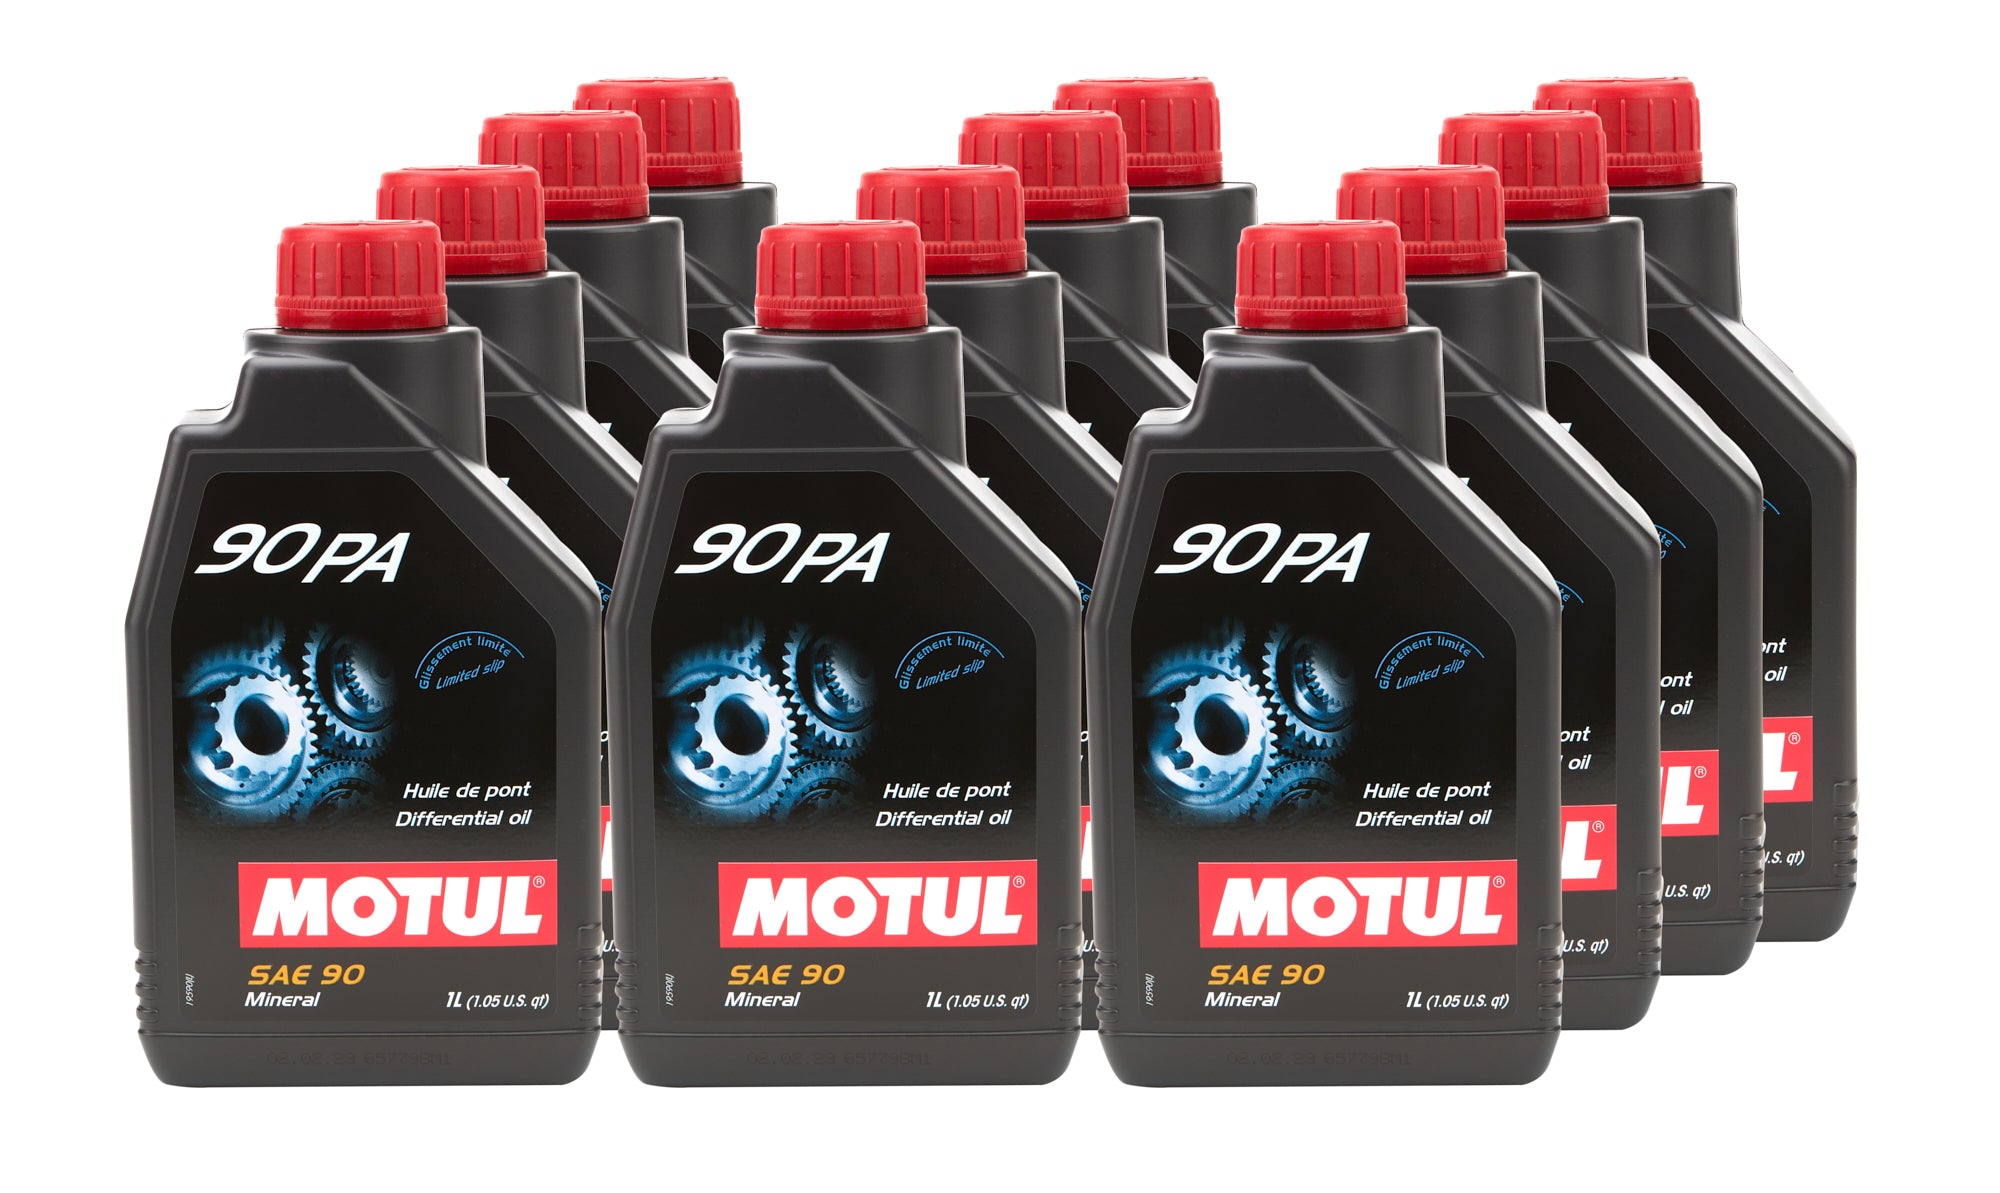 Motul 90PA Limited Slip Diff Oil Case 12 x 1 Liter Oils, Fluids and Additives Gear Oil main image